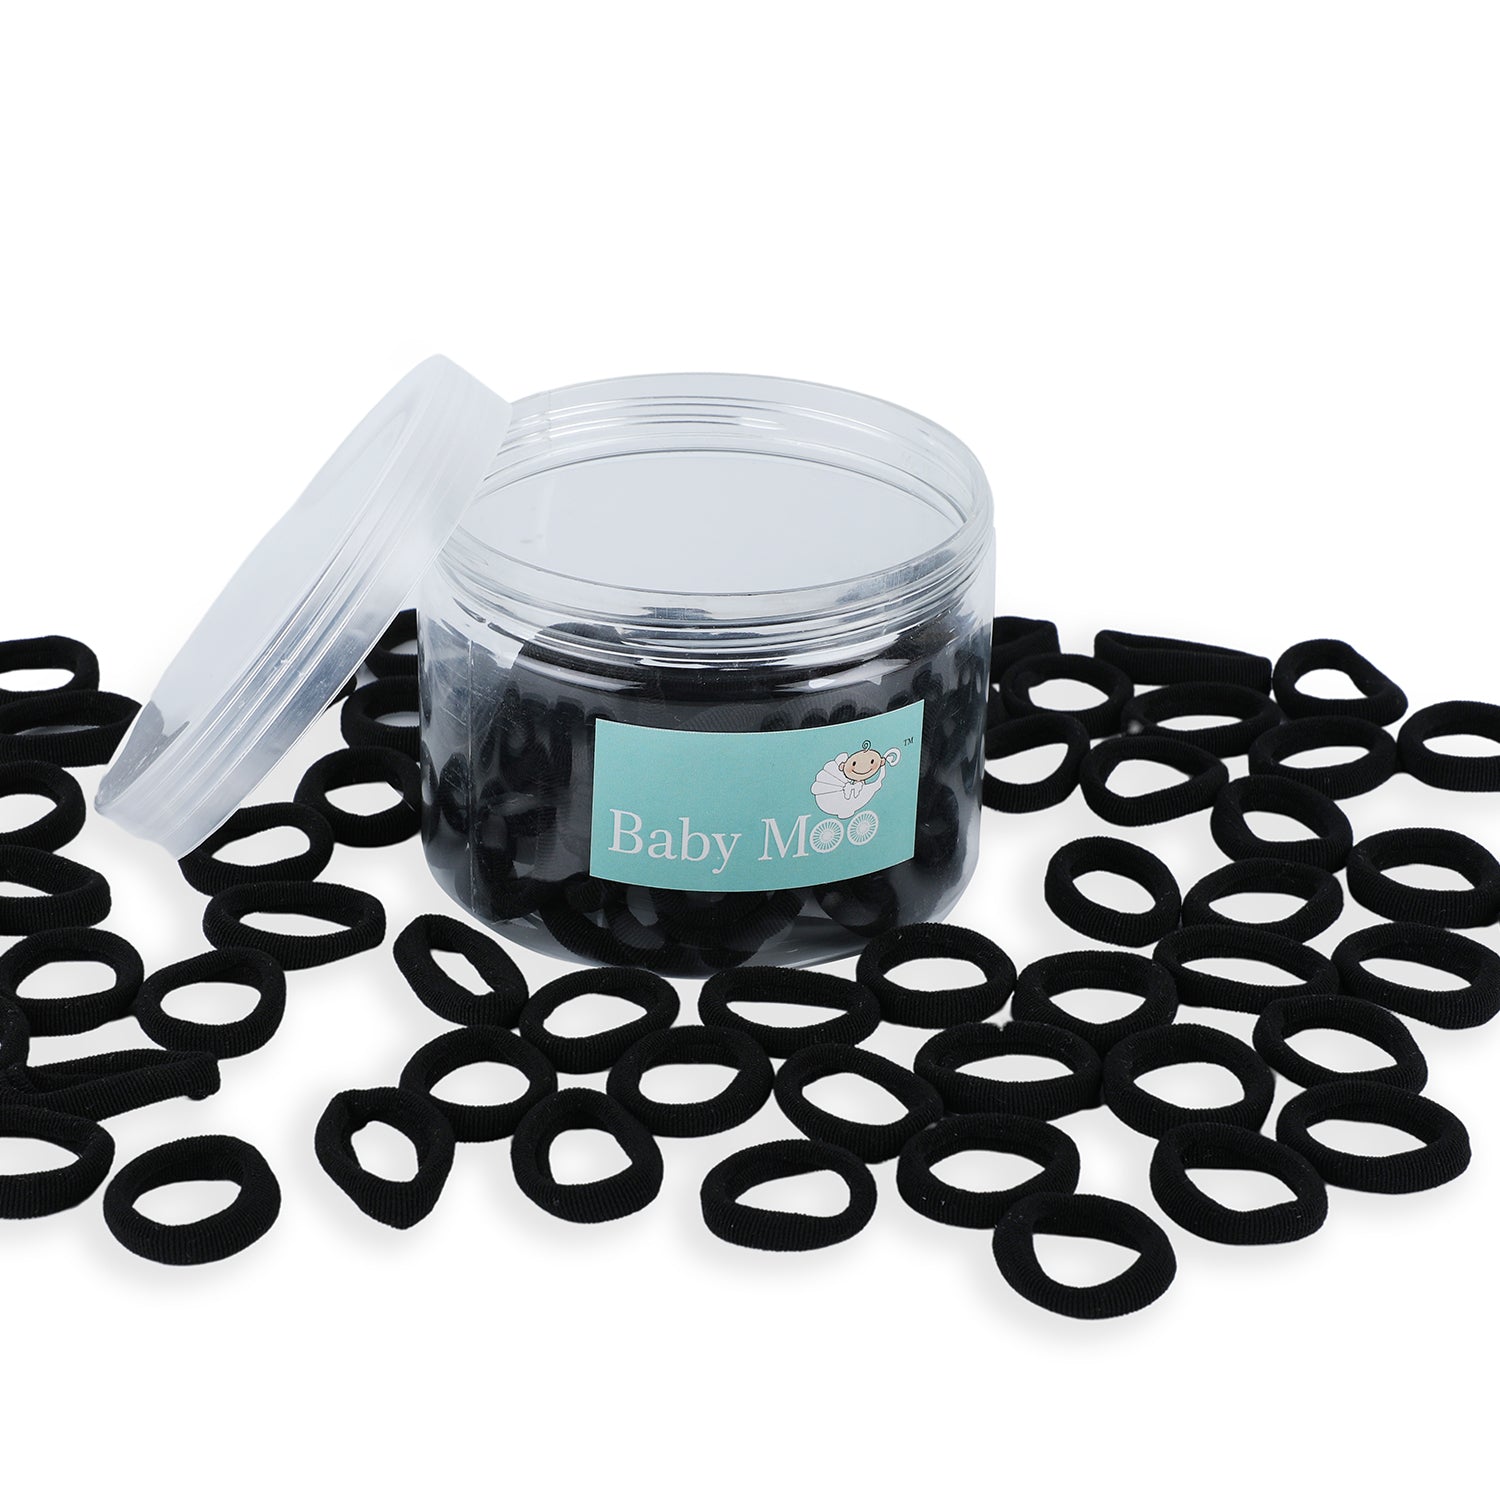 Mini Rubber Bands Soft Stretch Hair Elastic 100 Pcs - Black